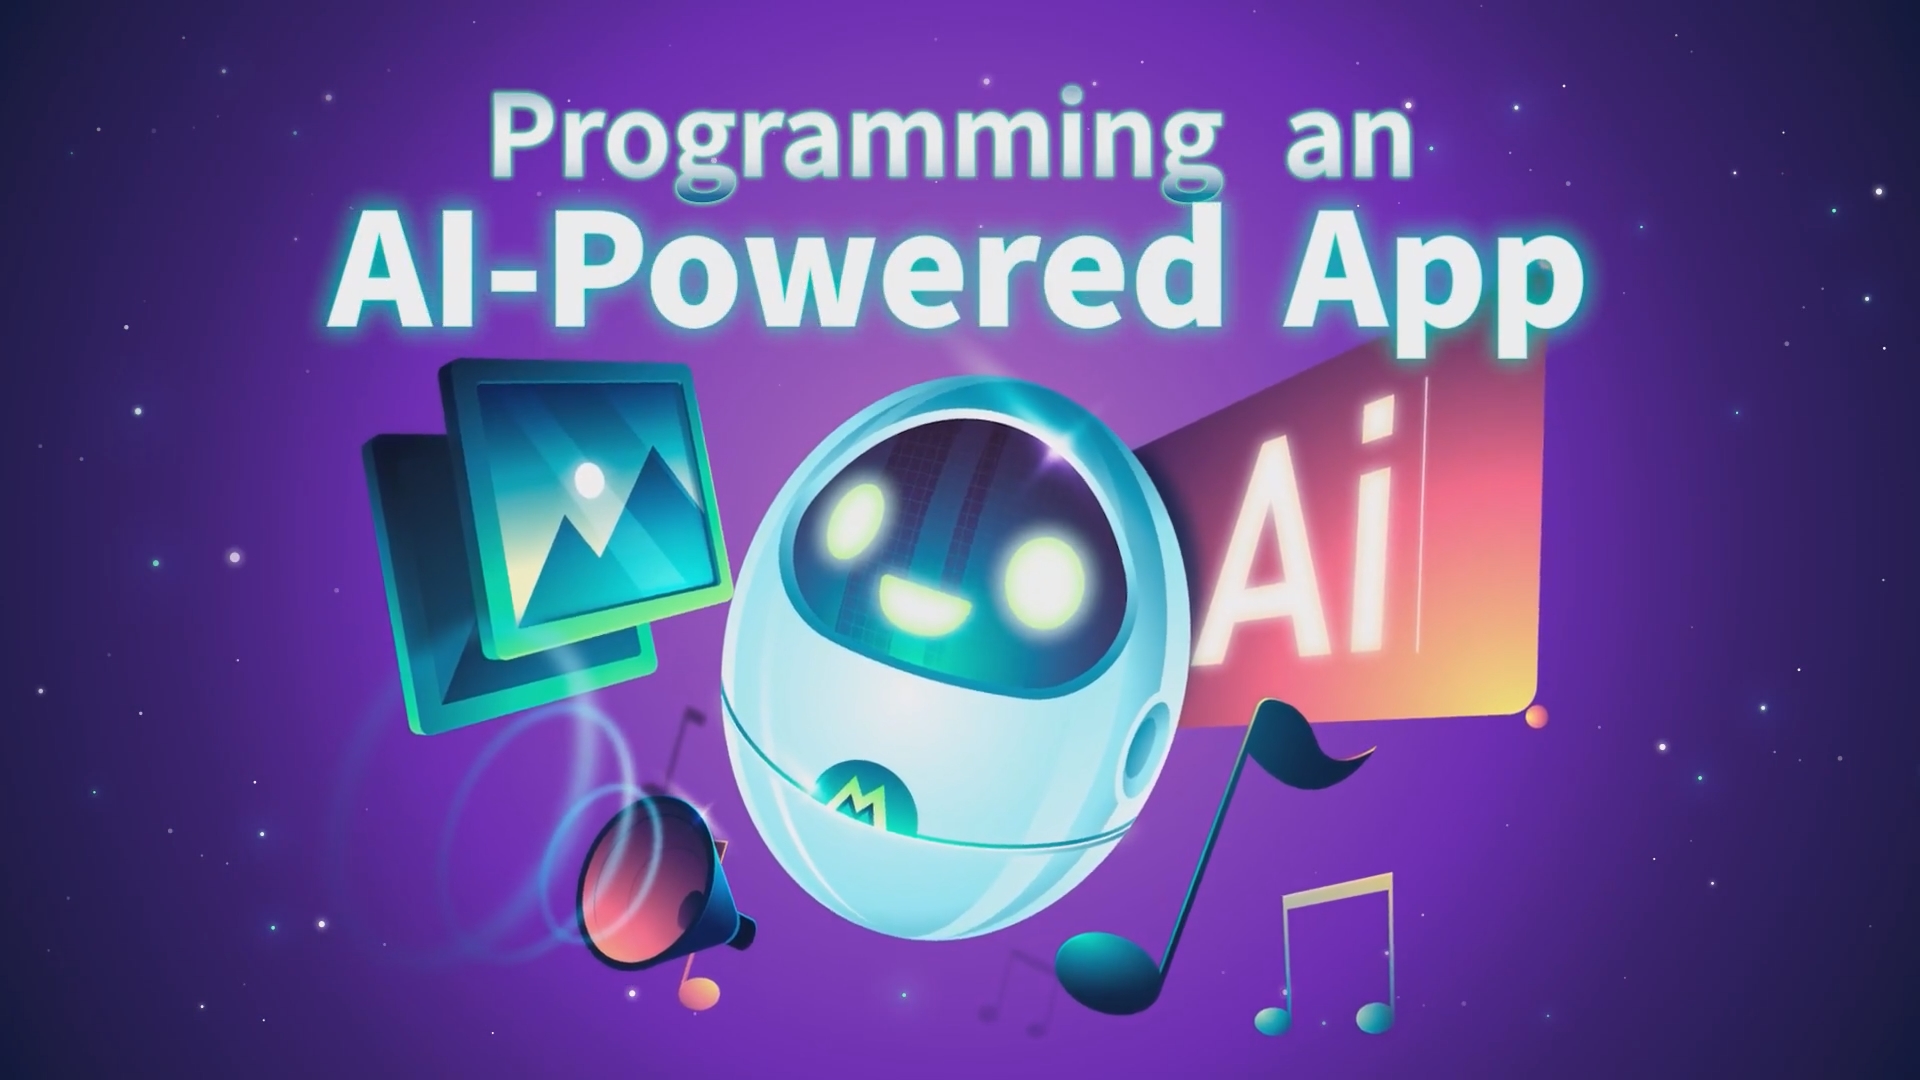 Programming an AI-Powered App